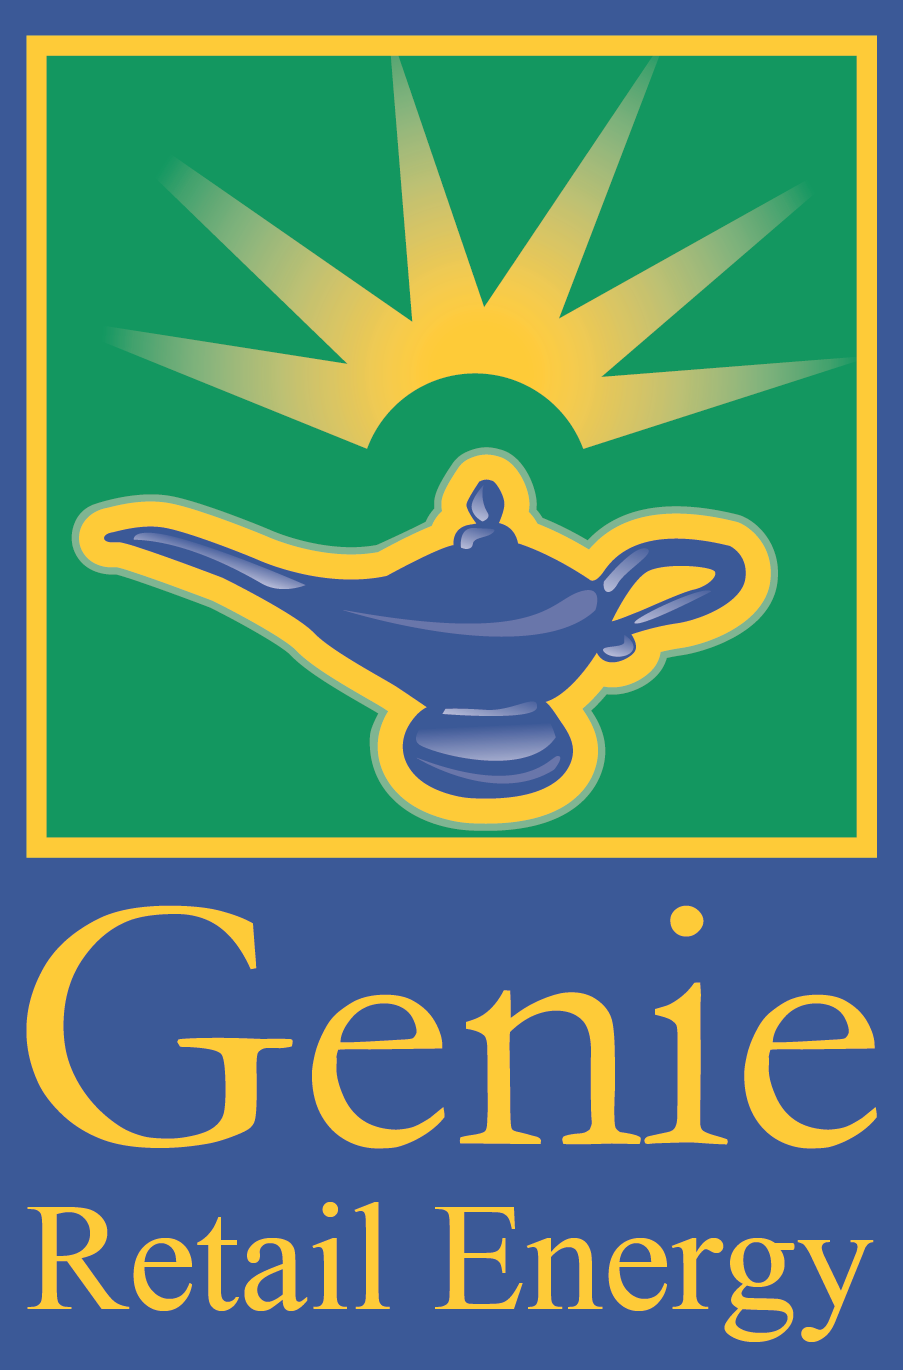 Genie Retail Energy